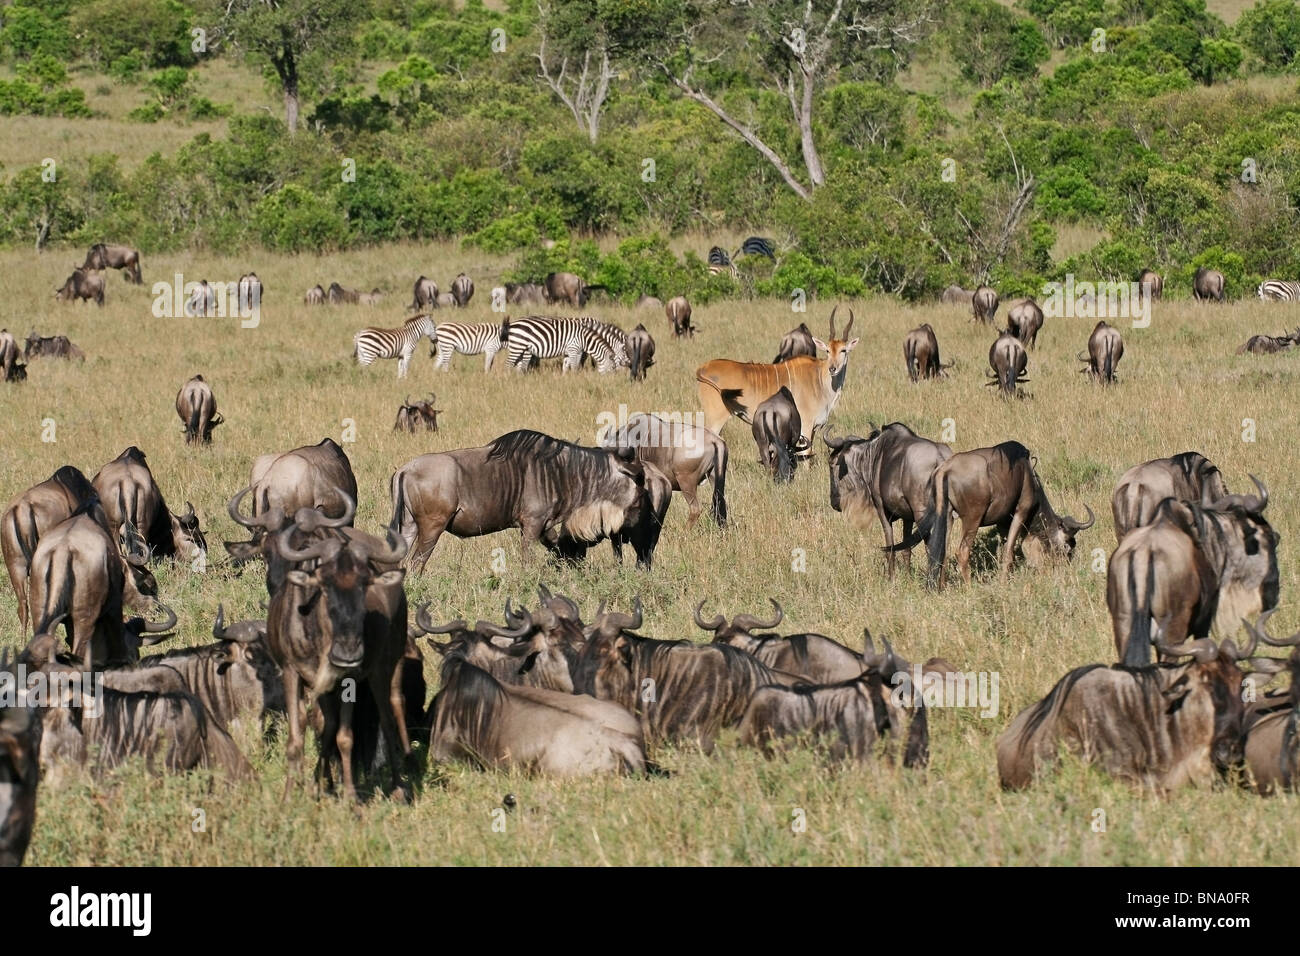 Thousands of Wildebeests, Zebras, Elands and Gazelles grazing in Masai Mara National Reserve, Kenya, East Africa Stock Photo